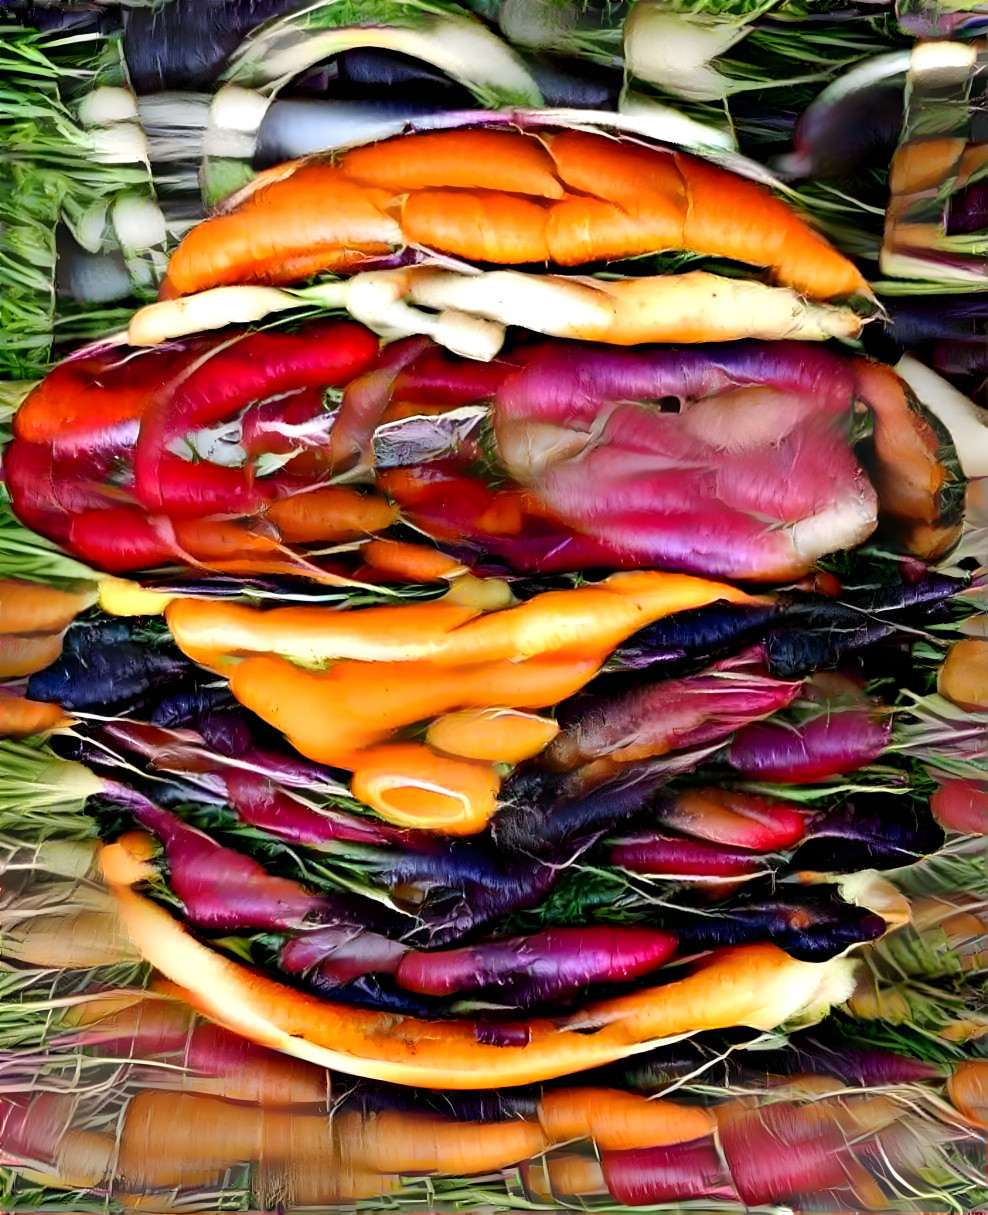 hamburger retexture with carrots